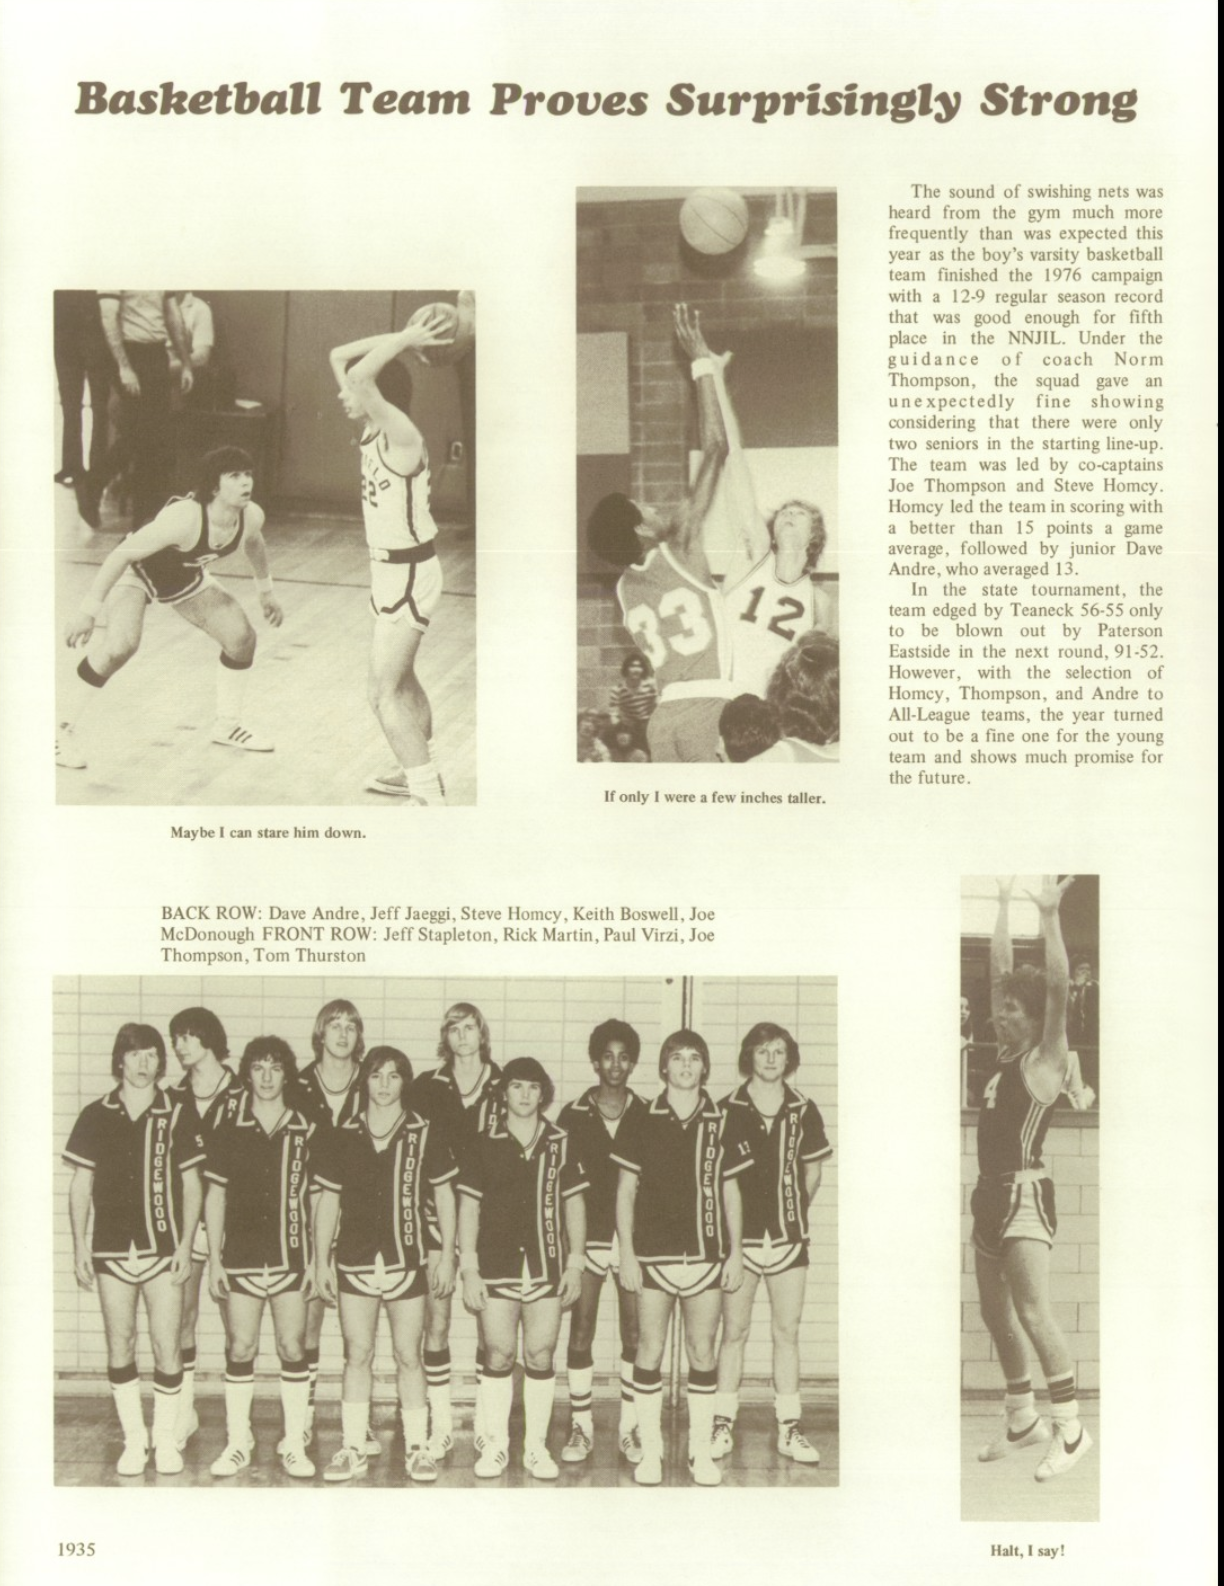 1976 Boys’ Basketball Team